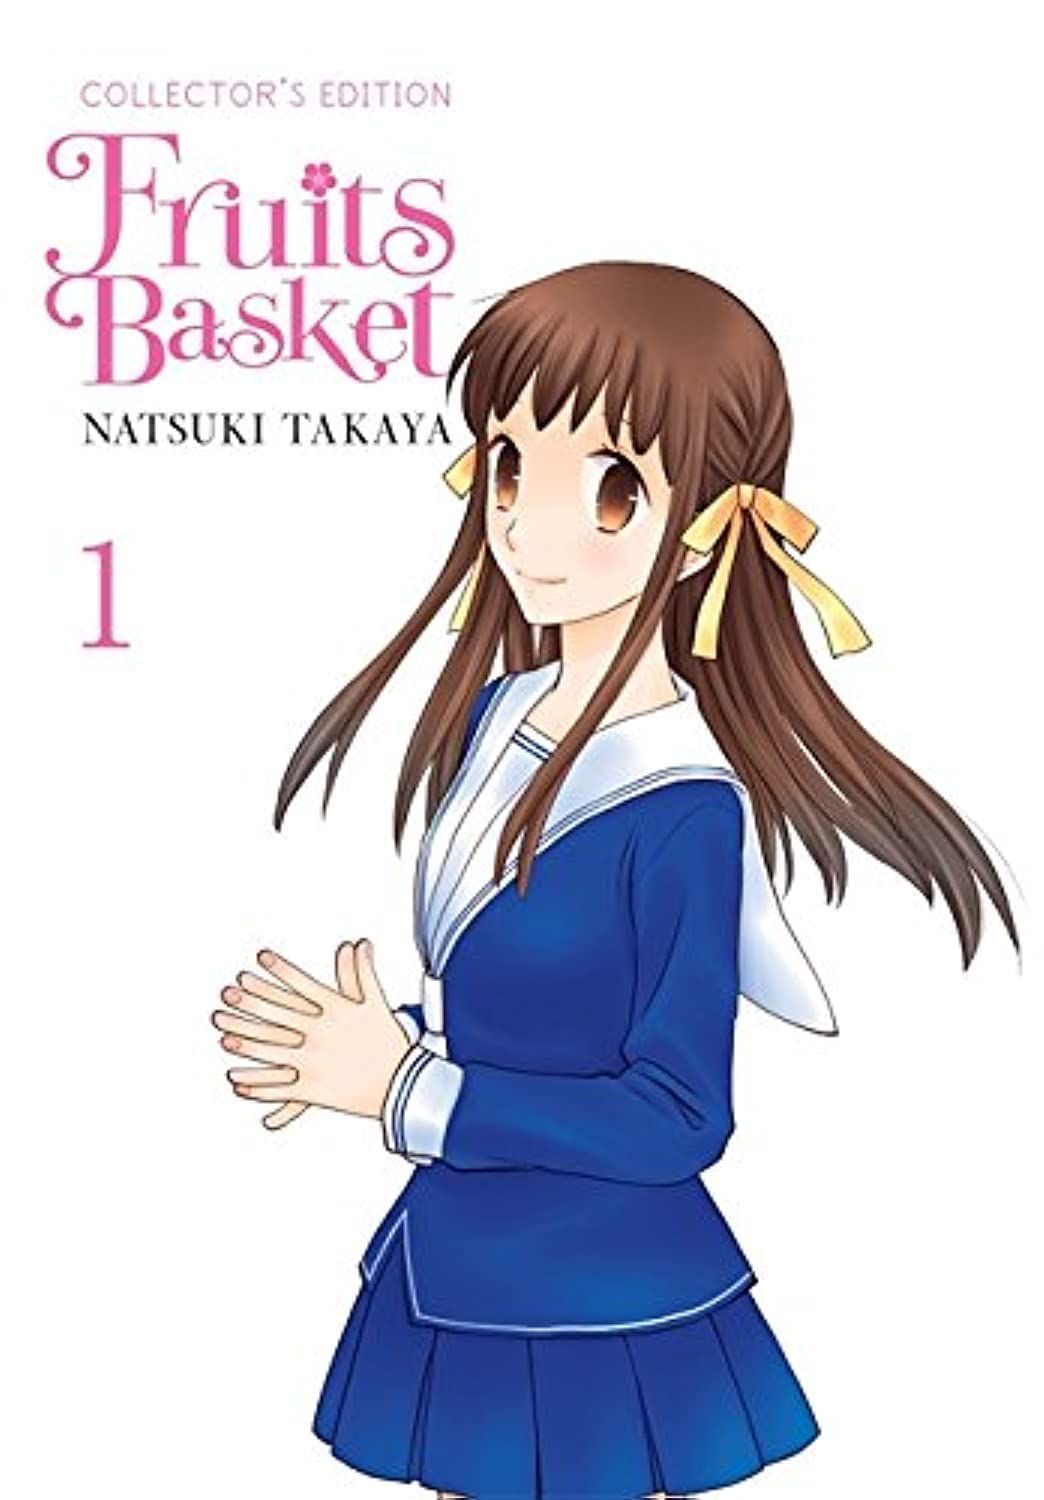 Fruits Basket by Natsuki Takaya cover